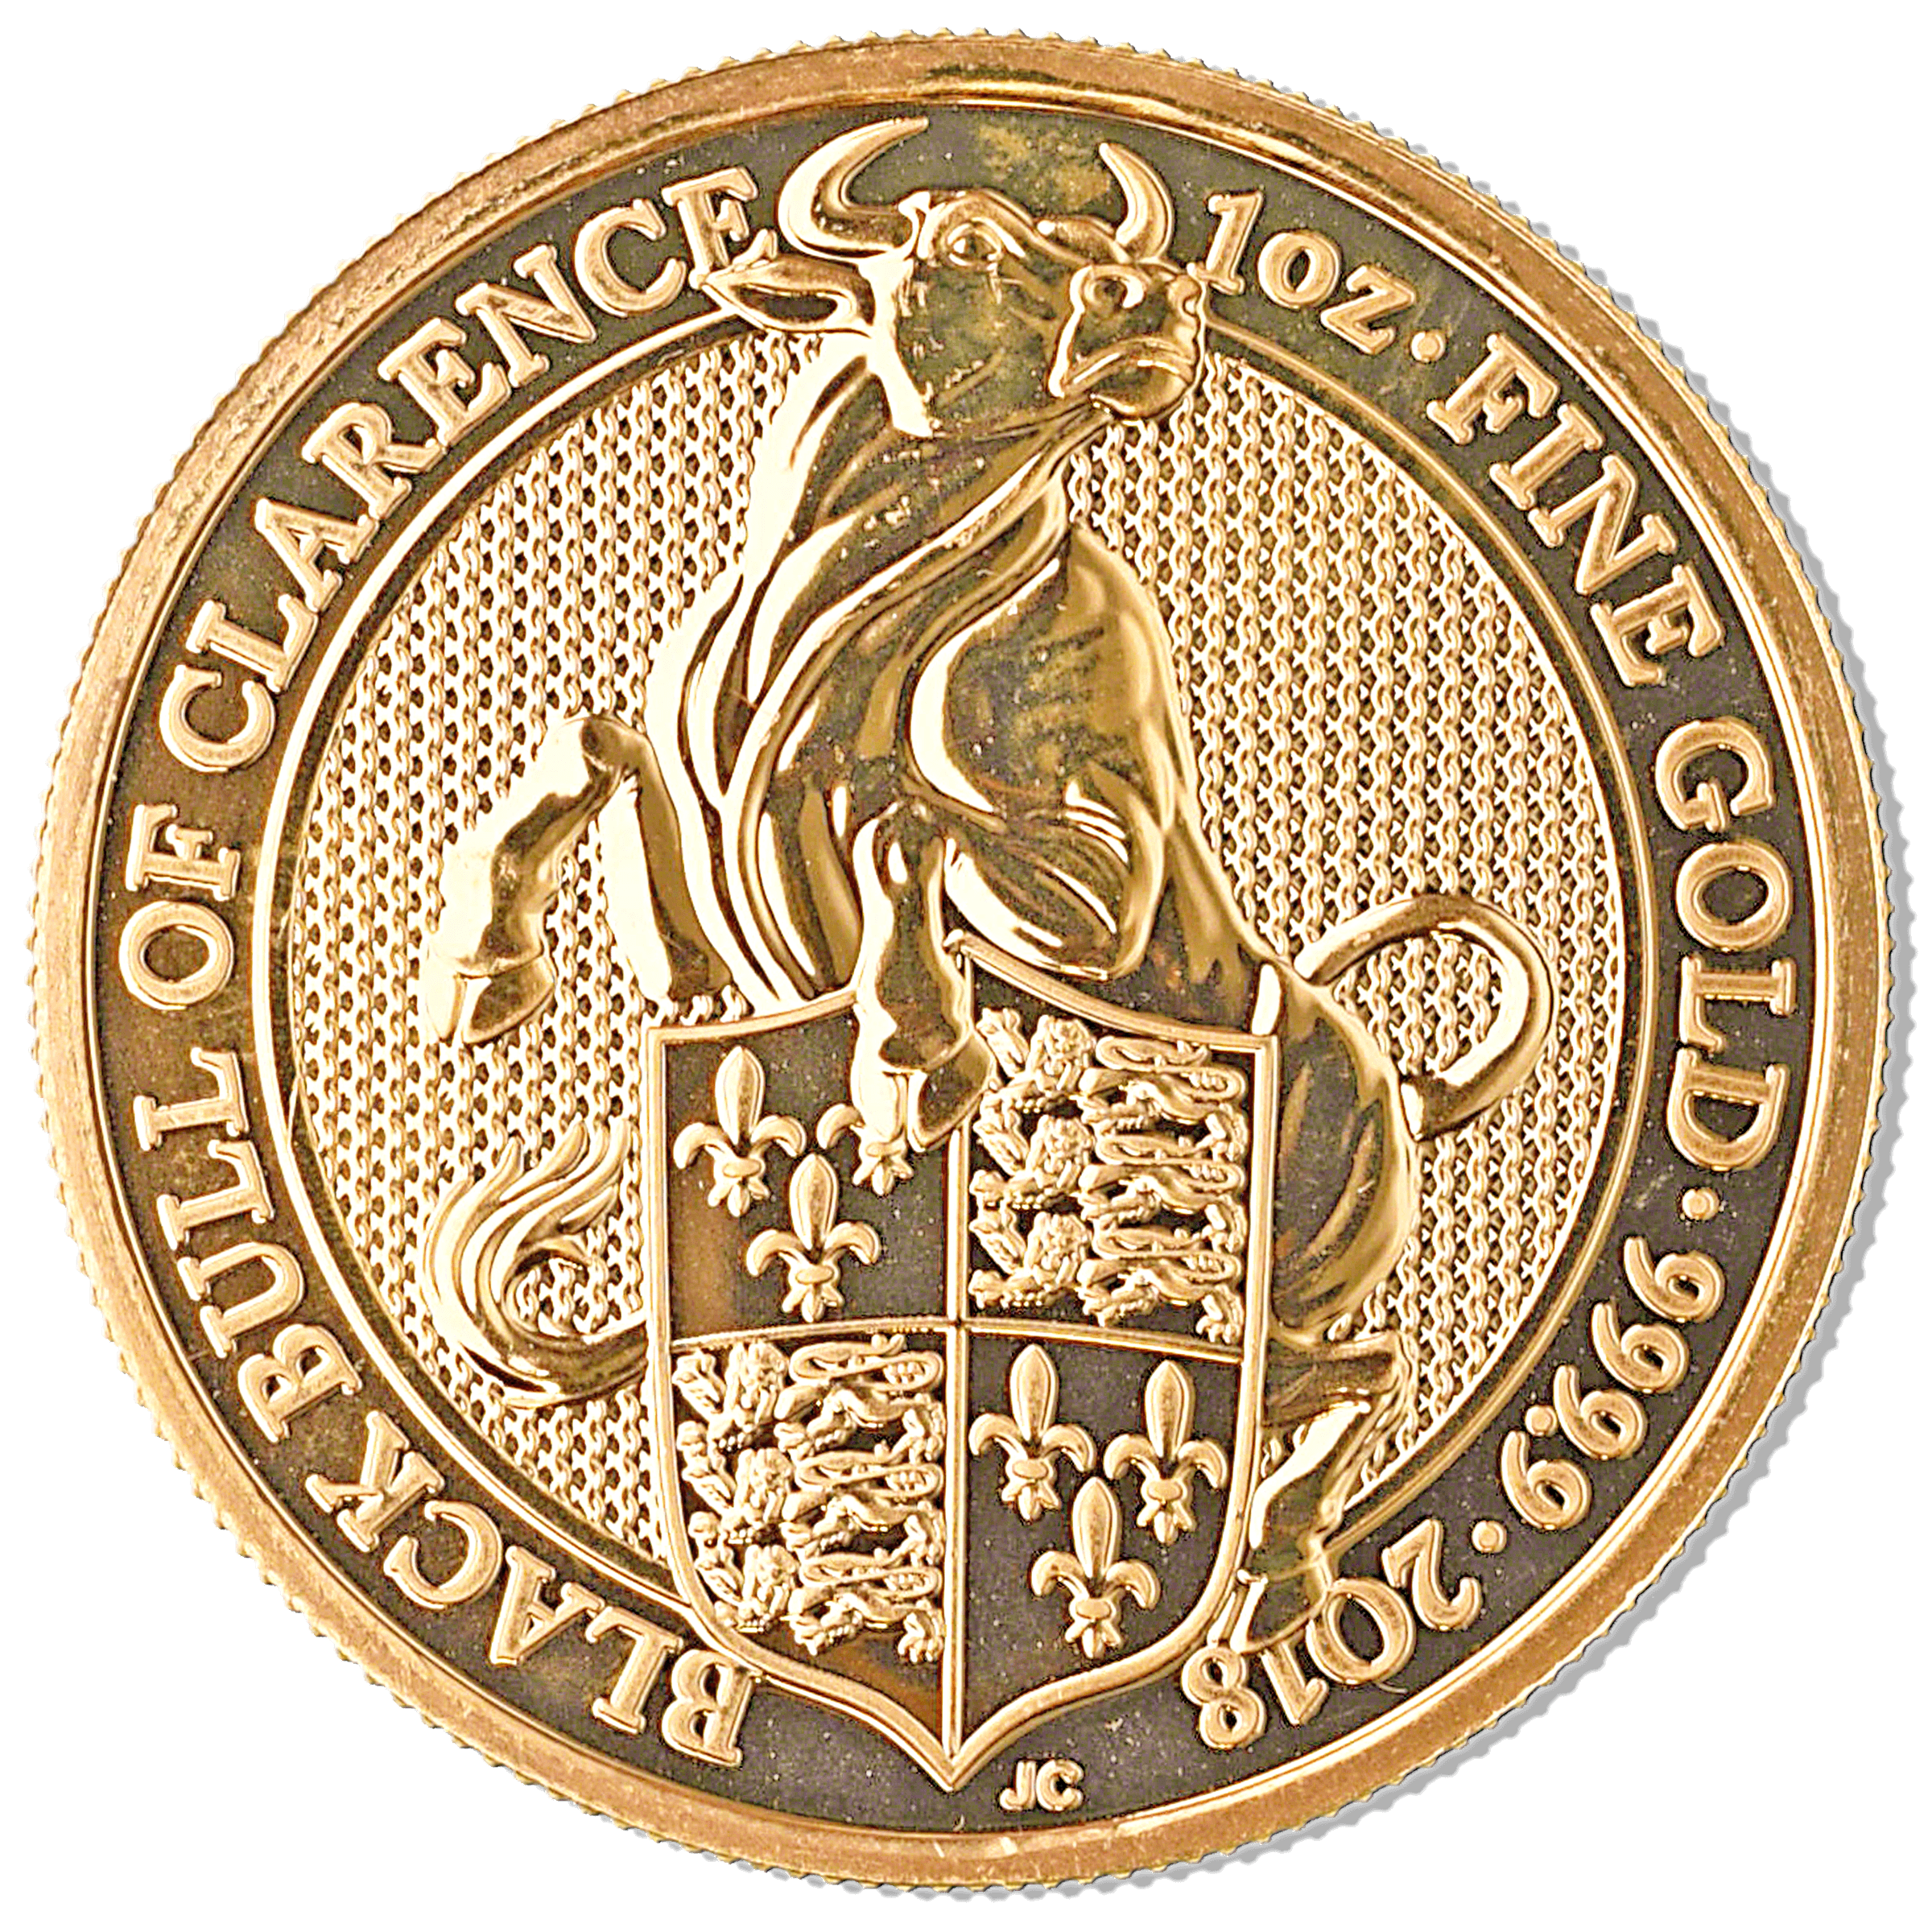 Black and Gold Bull Logo - United Kingdom Gold Queen's Beast 2018 - Black Bull - 1 oz